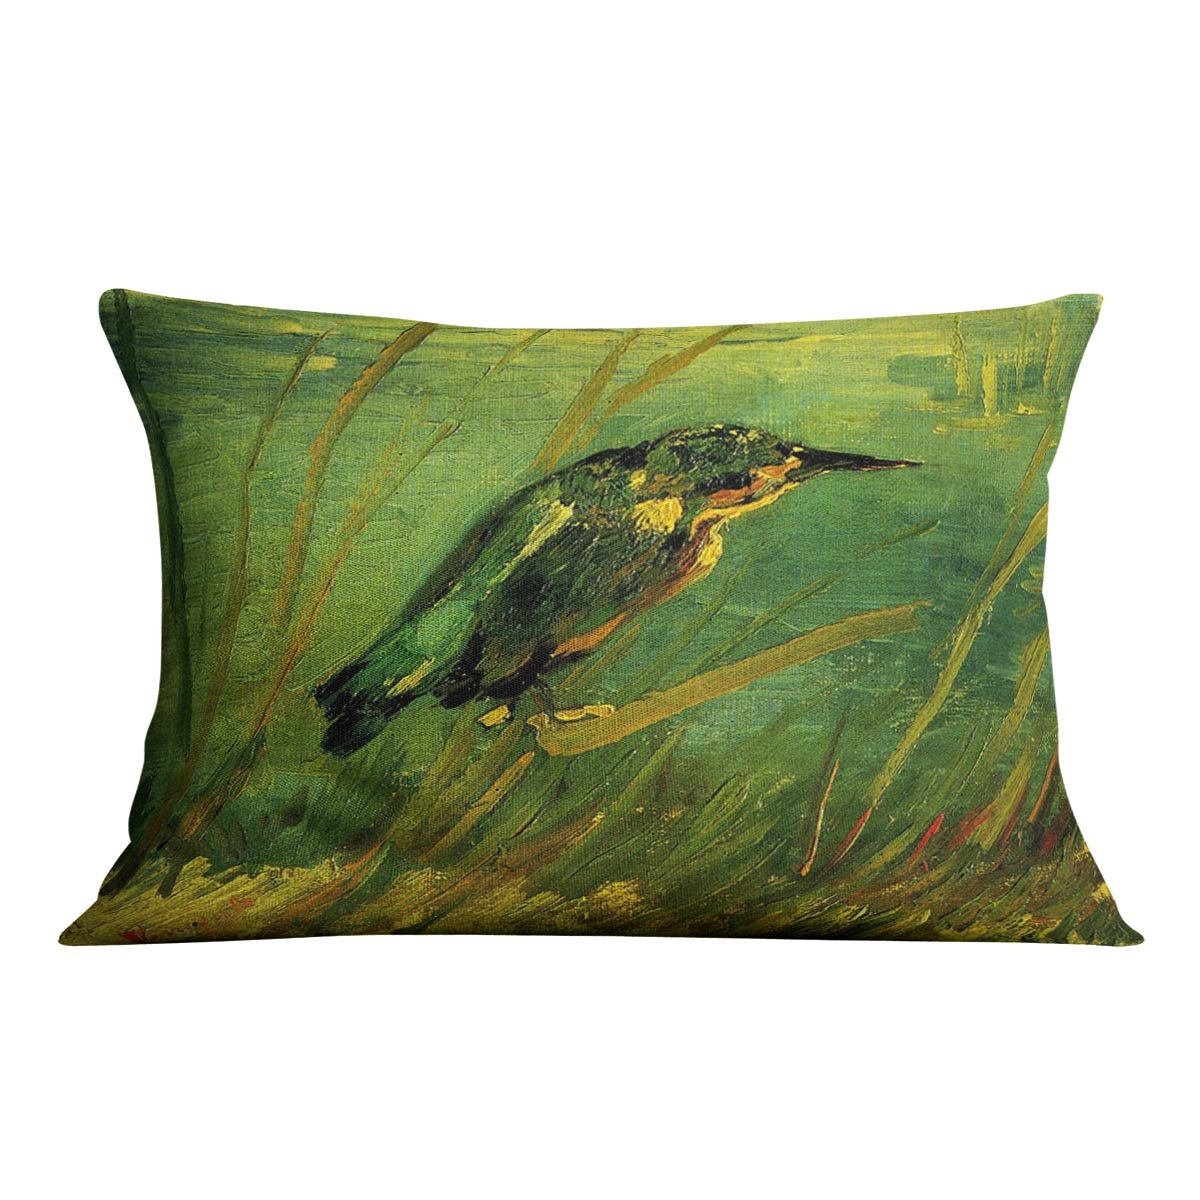 The Kingfisher by Van Gogh Cushion